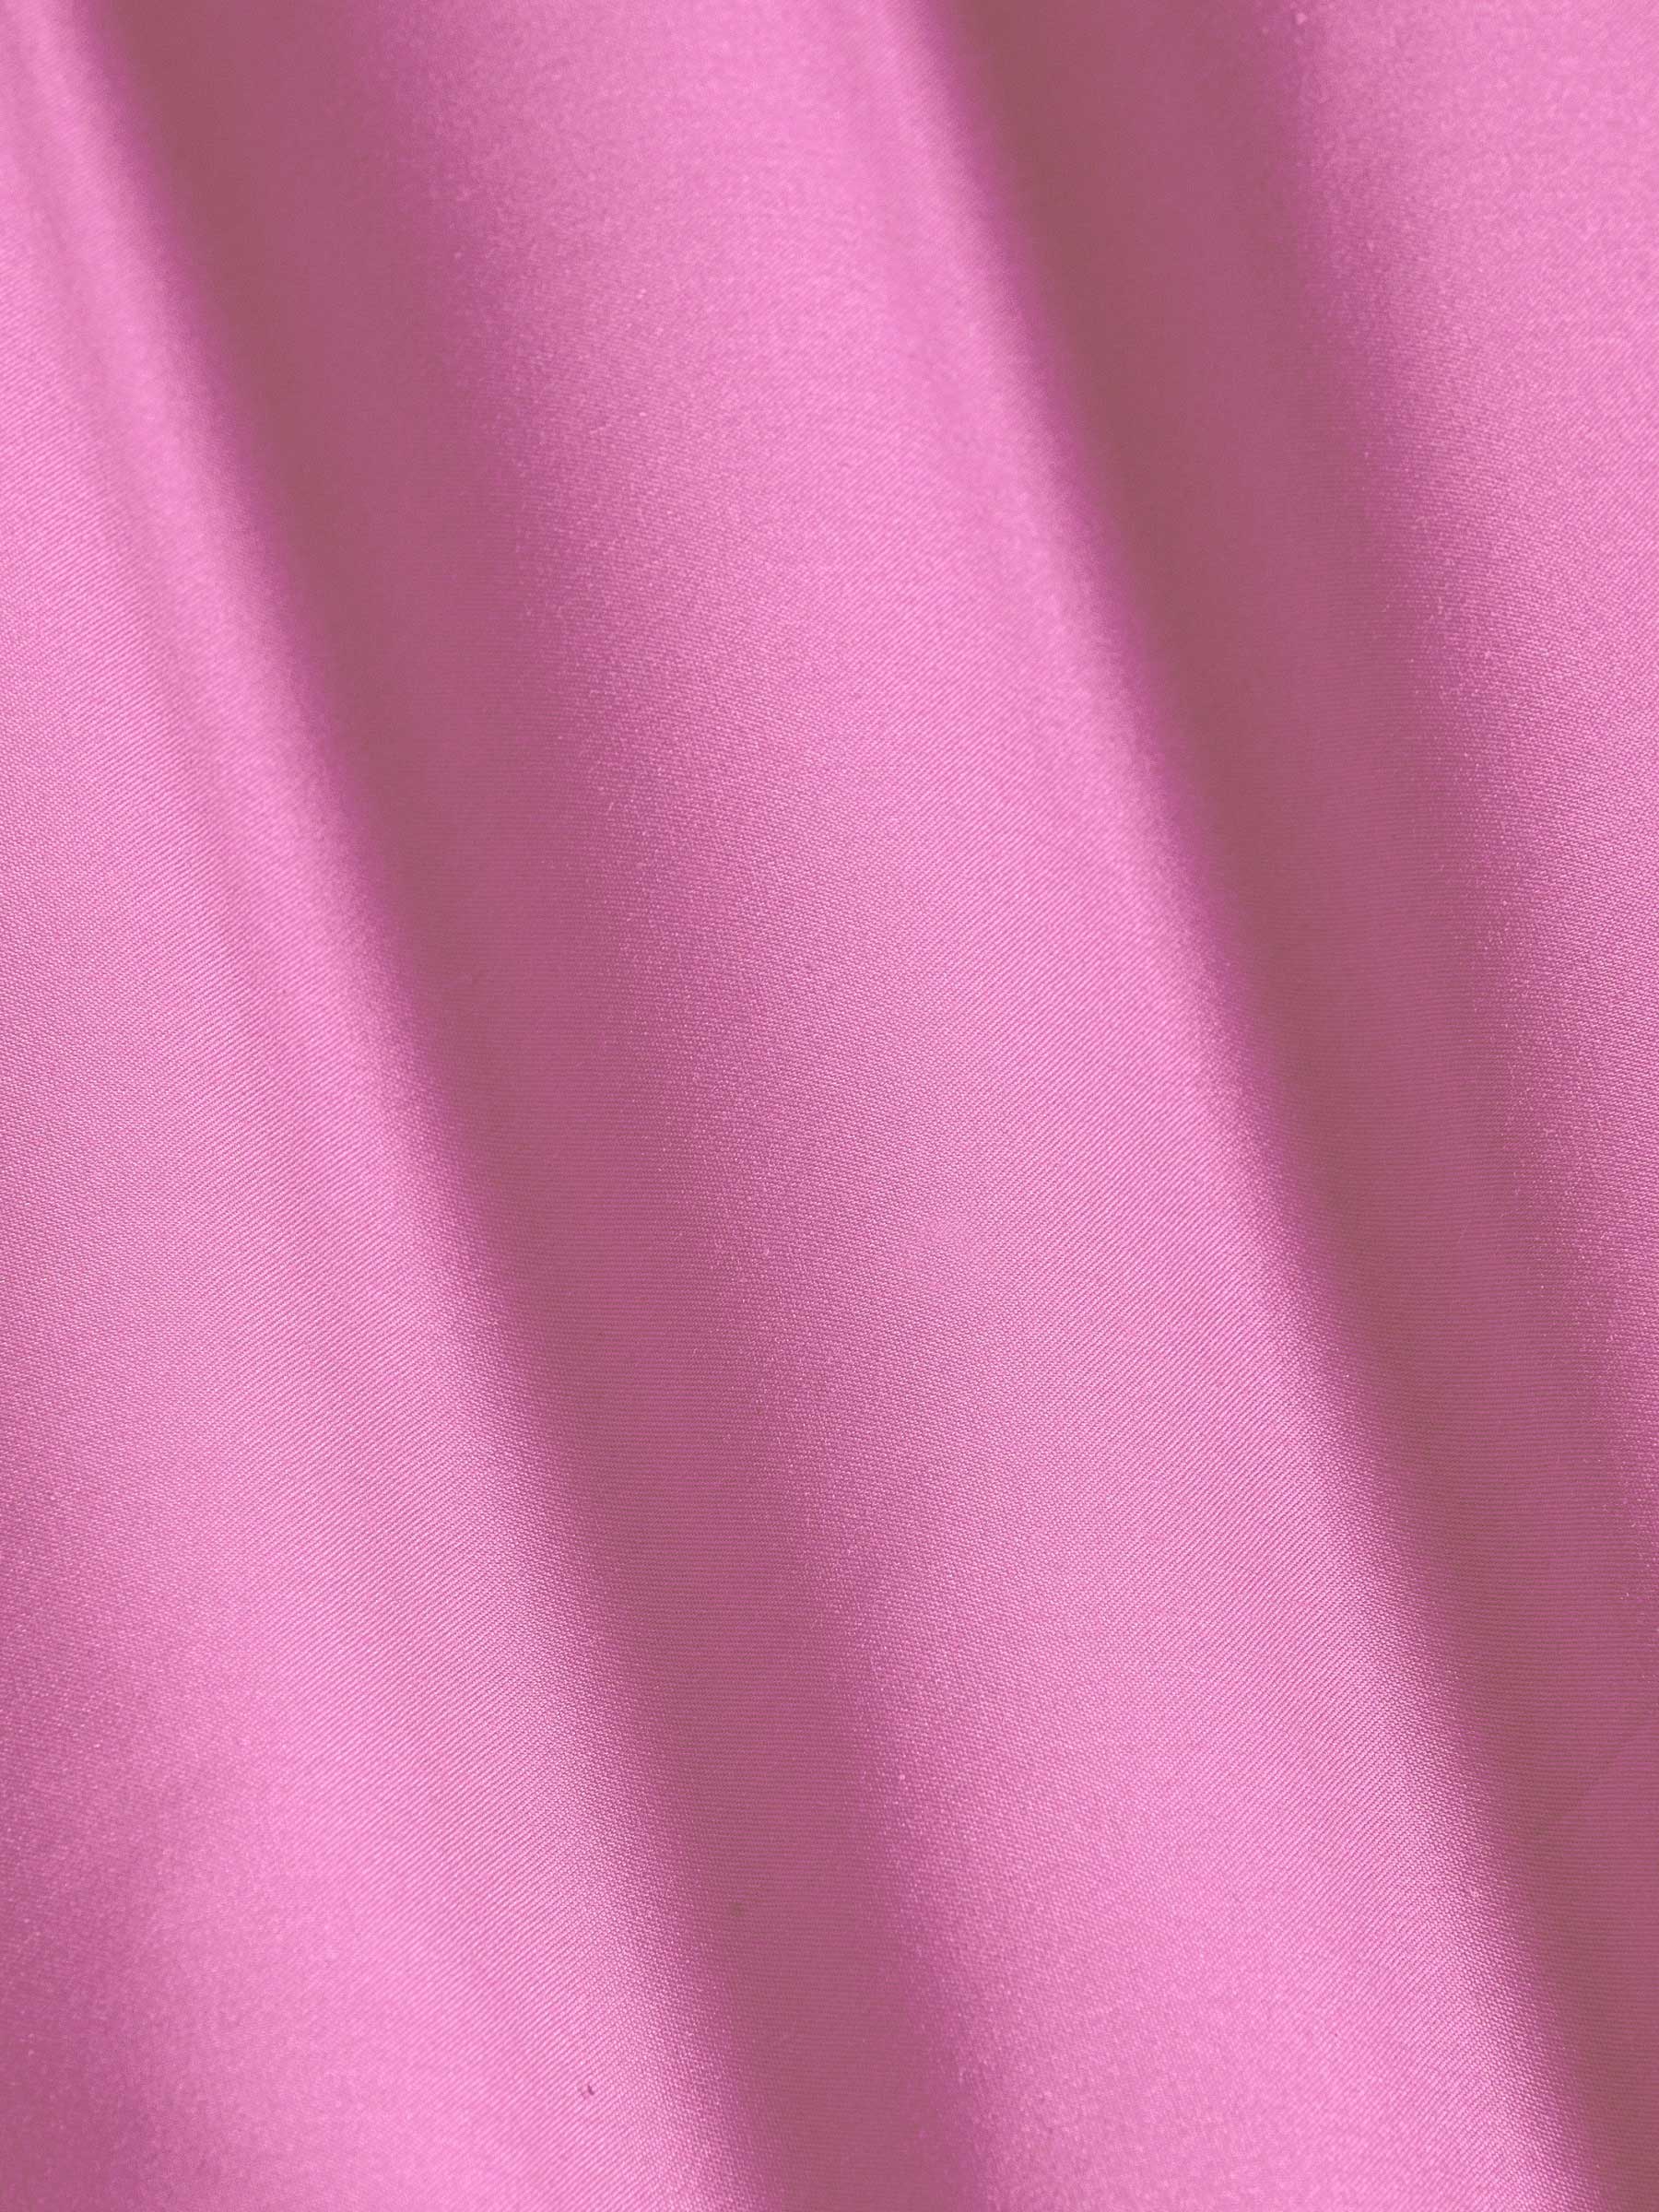 Leira Solid Dark Pink Overhemd Lange Mouw